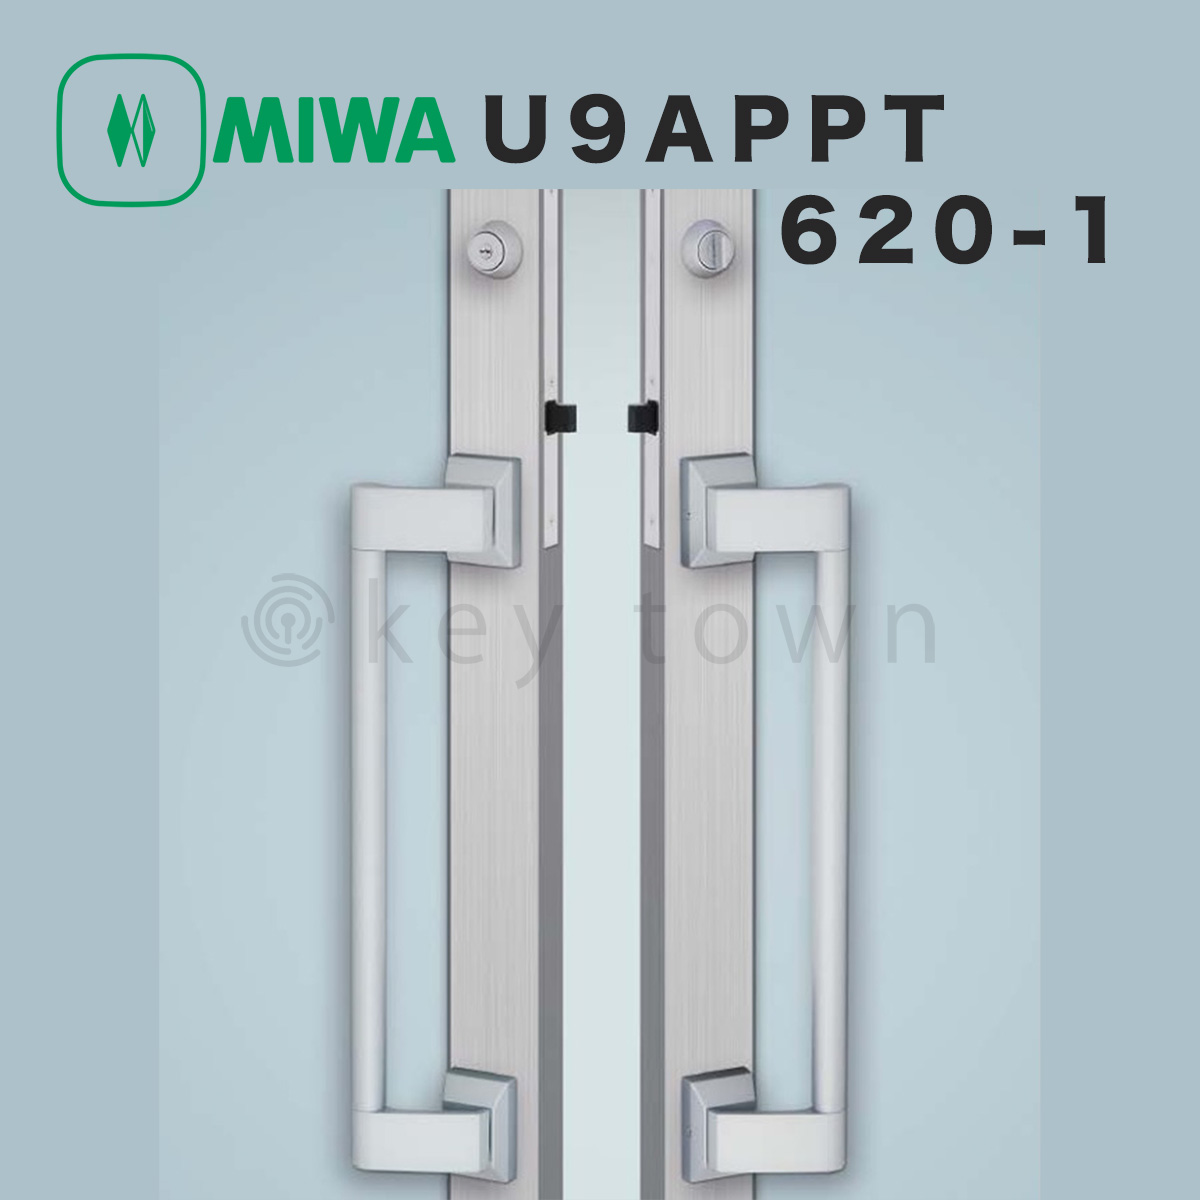 MIWA 【美和ロック】 U9APPT620-1 プッシュプル型電気錠 51型